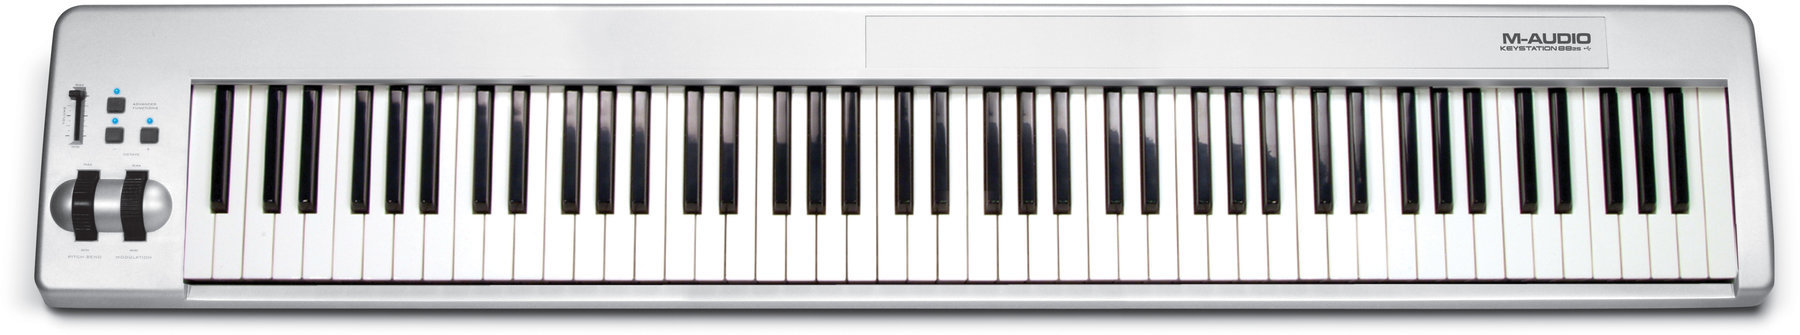 Claviatură MIDI M-Audio Keystation 88 es